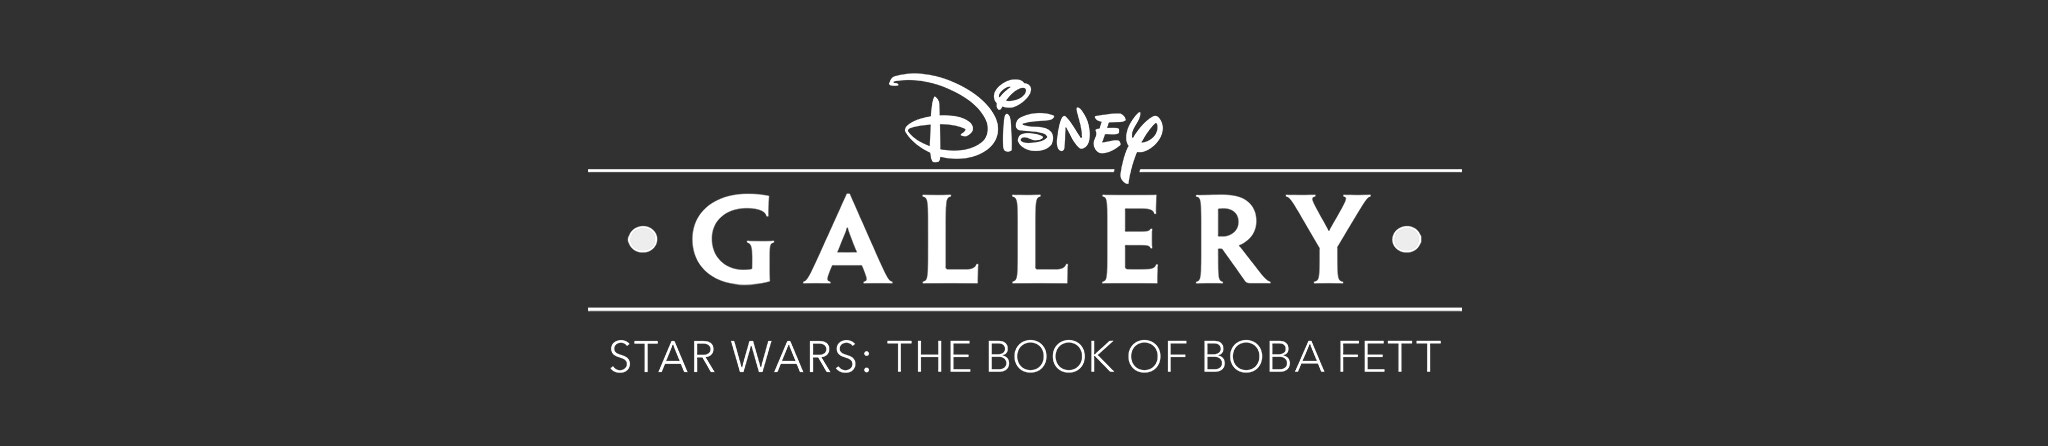 Disney Gallery | The Book of Boba Fett 